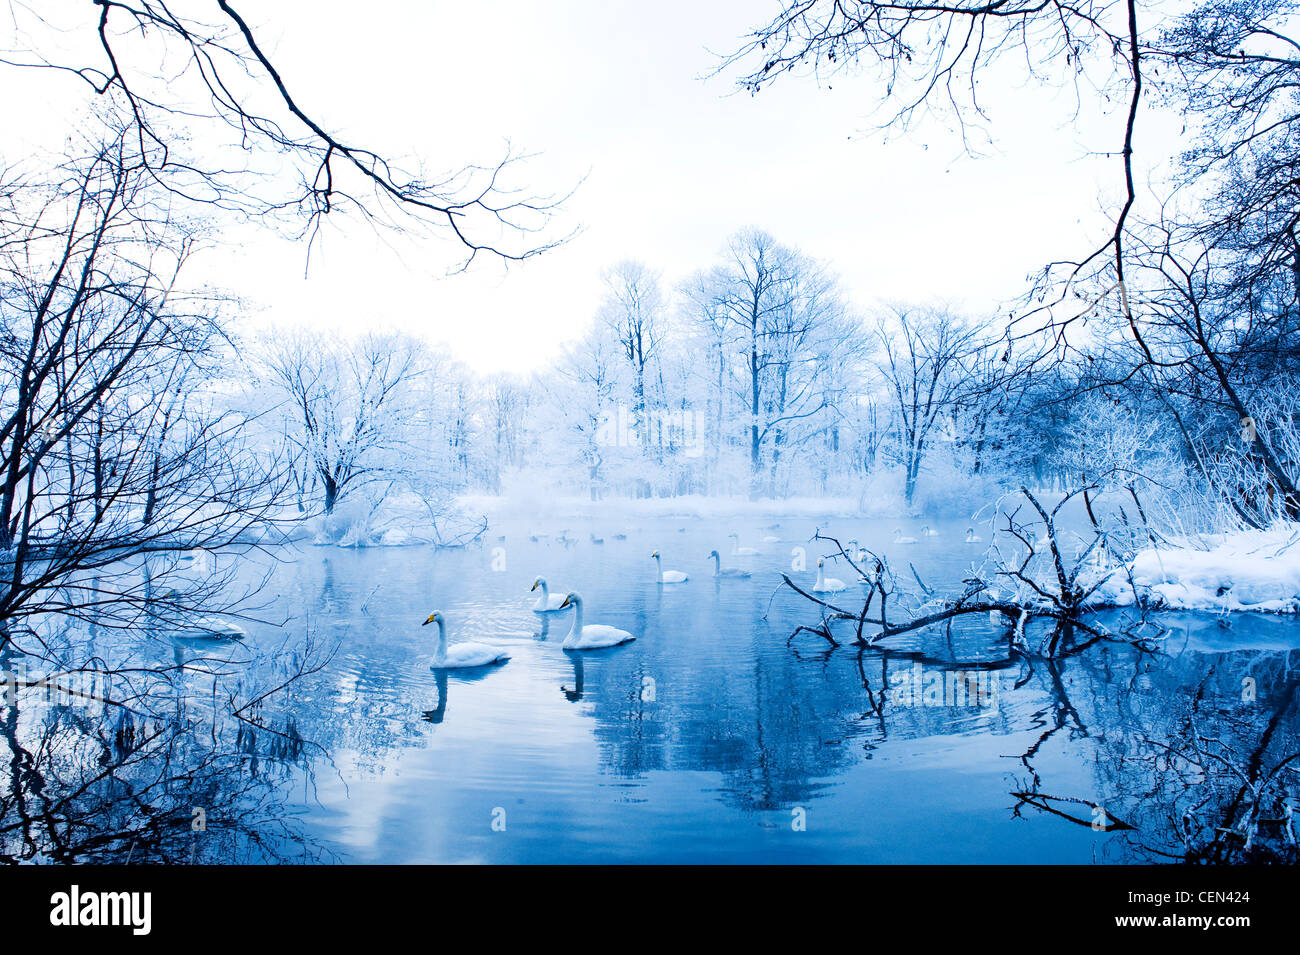 Swans in Winter Landscape Stock Photo